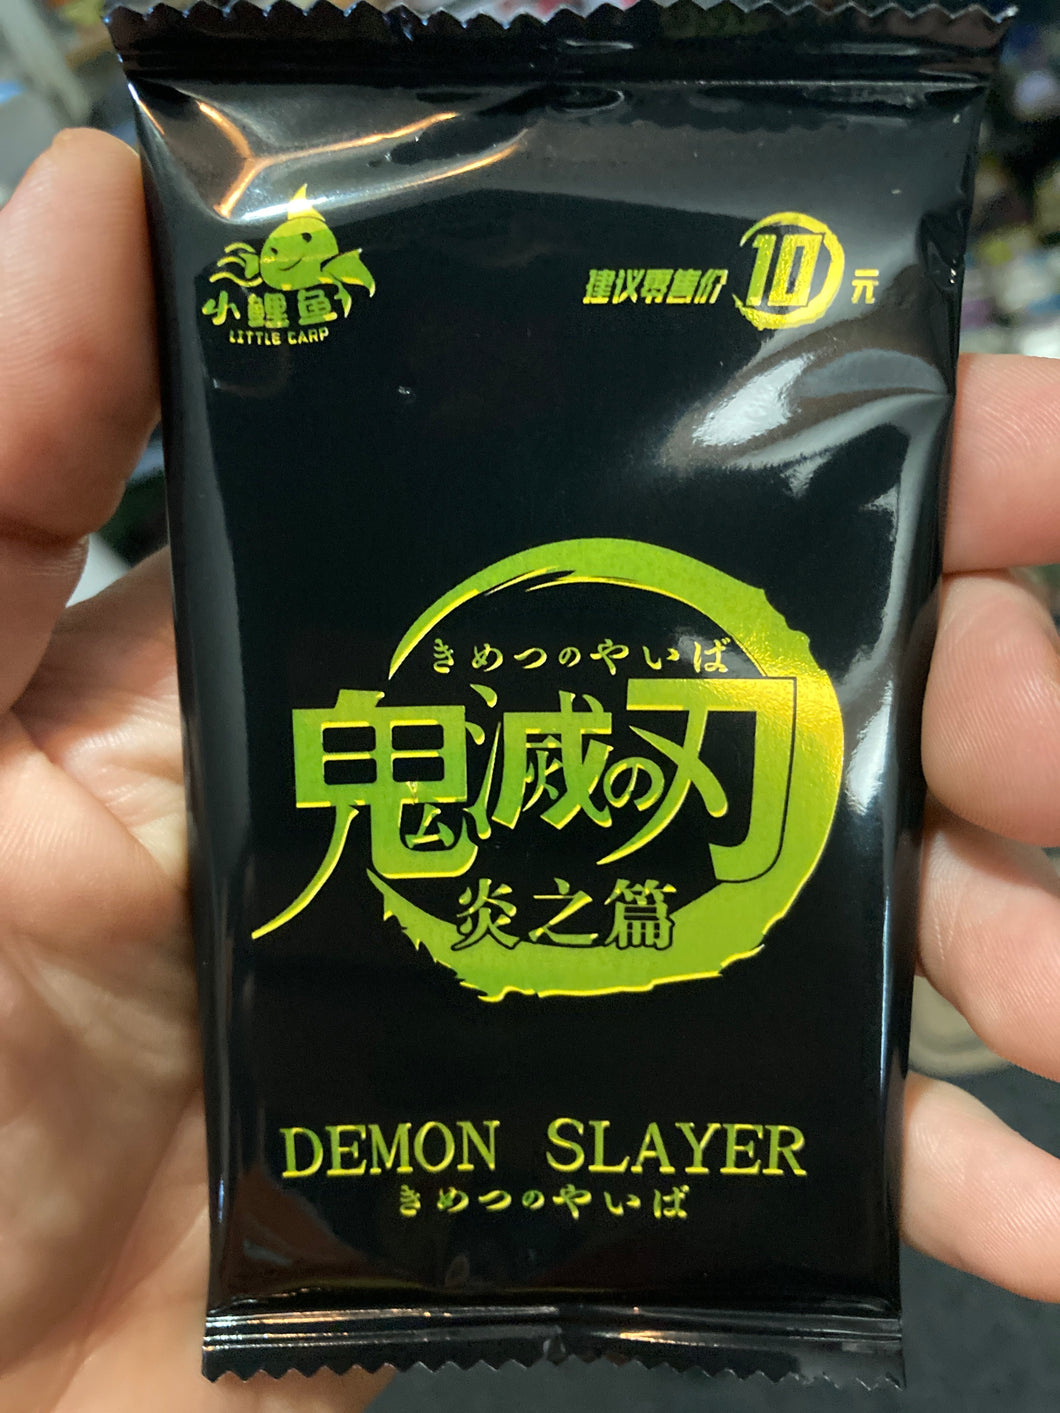 Single pack of Demon Slayer